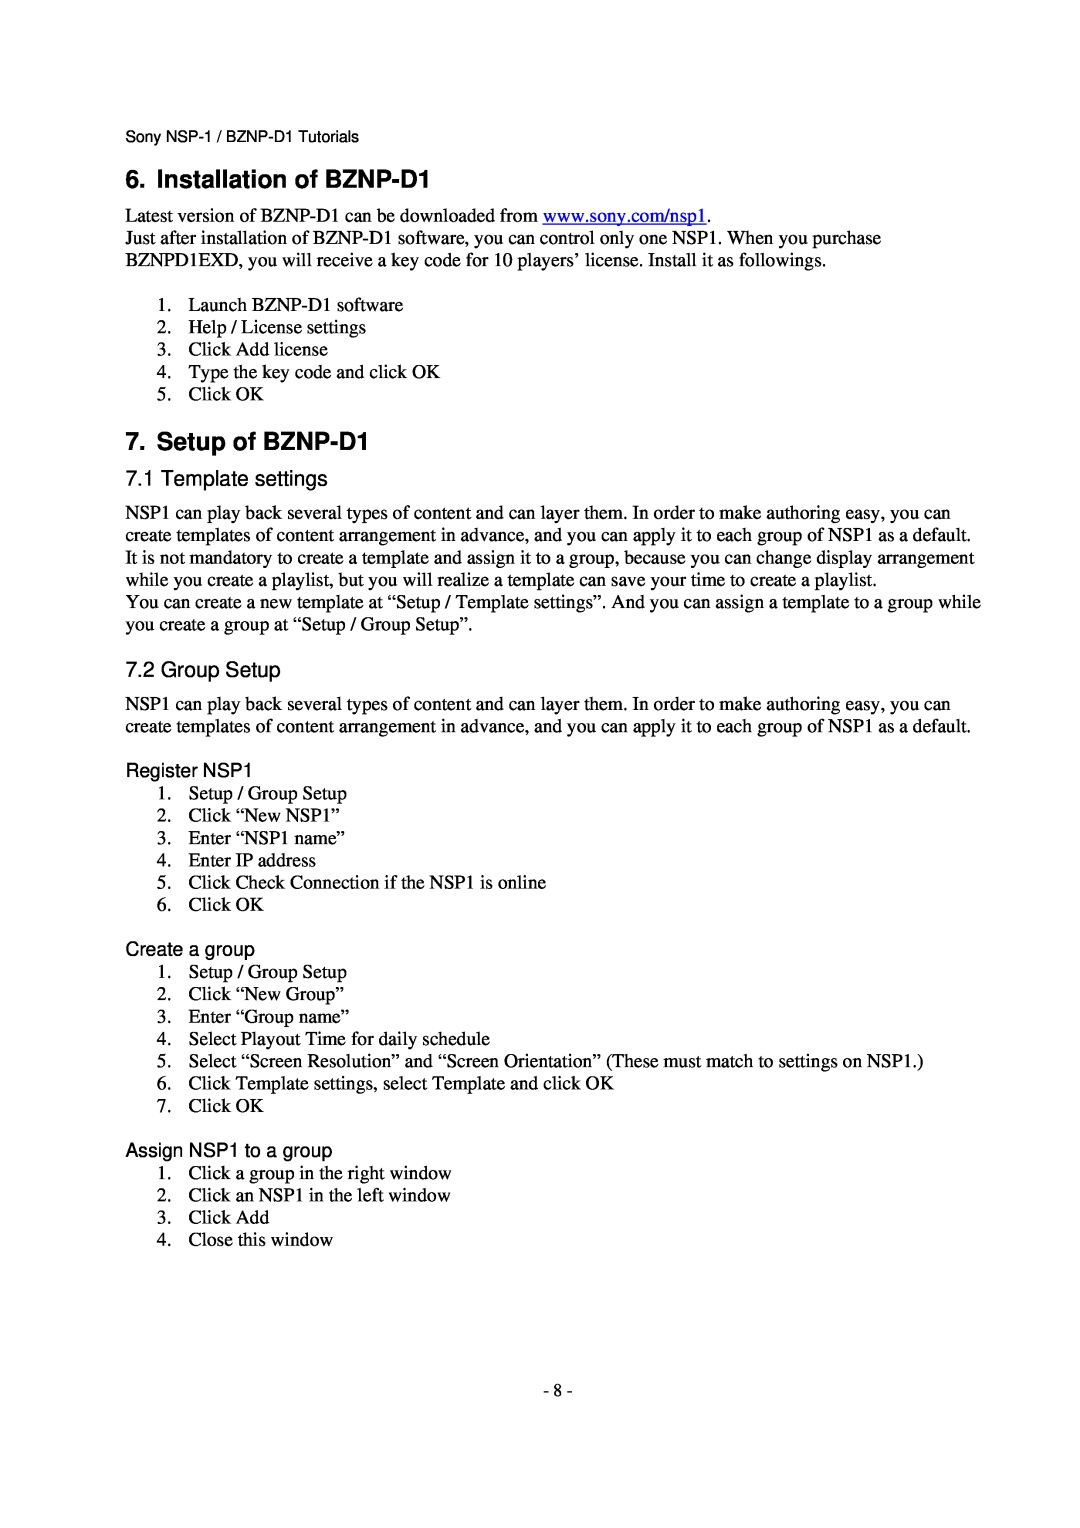 Sony NSP-1 manual Installation of BZNP-D1, Setup of BZNP-D1, Template settings, Group Setup 